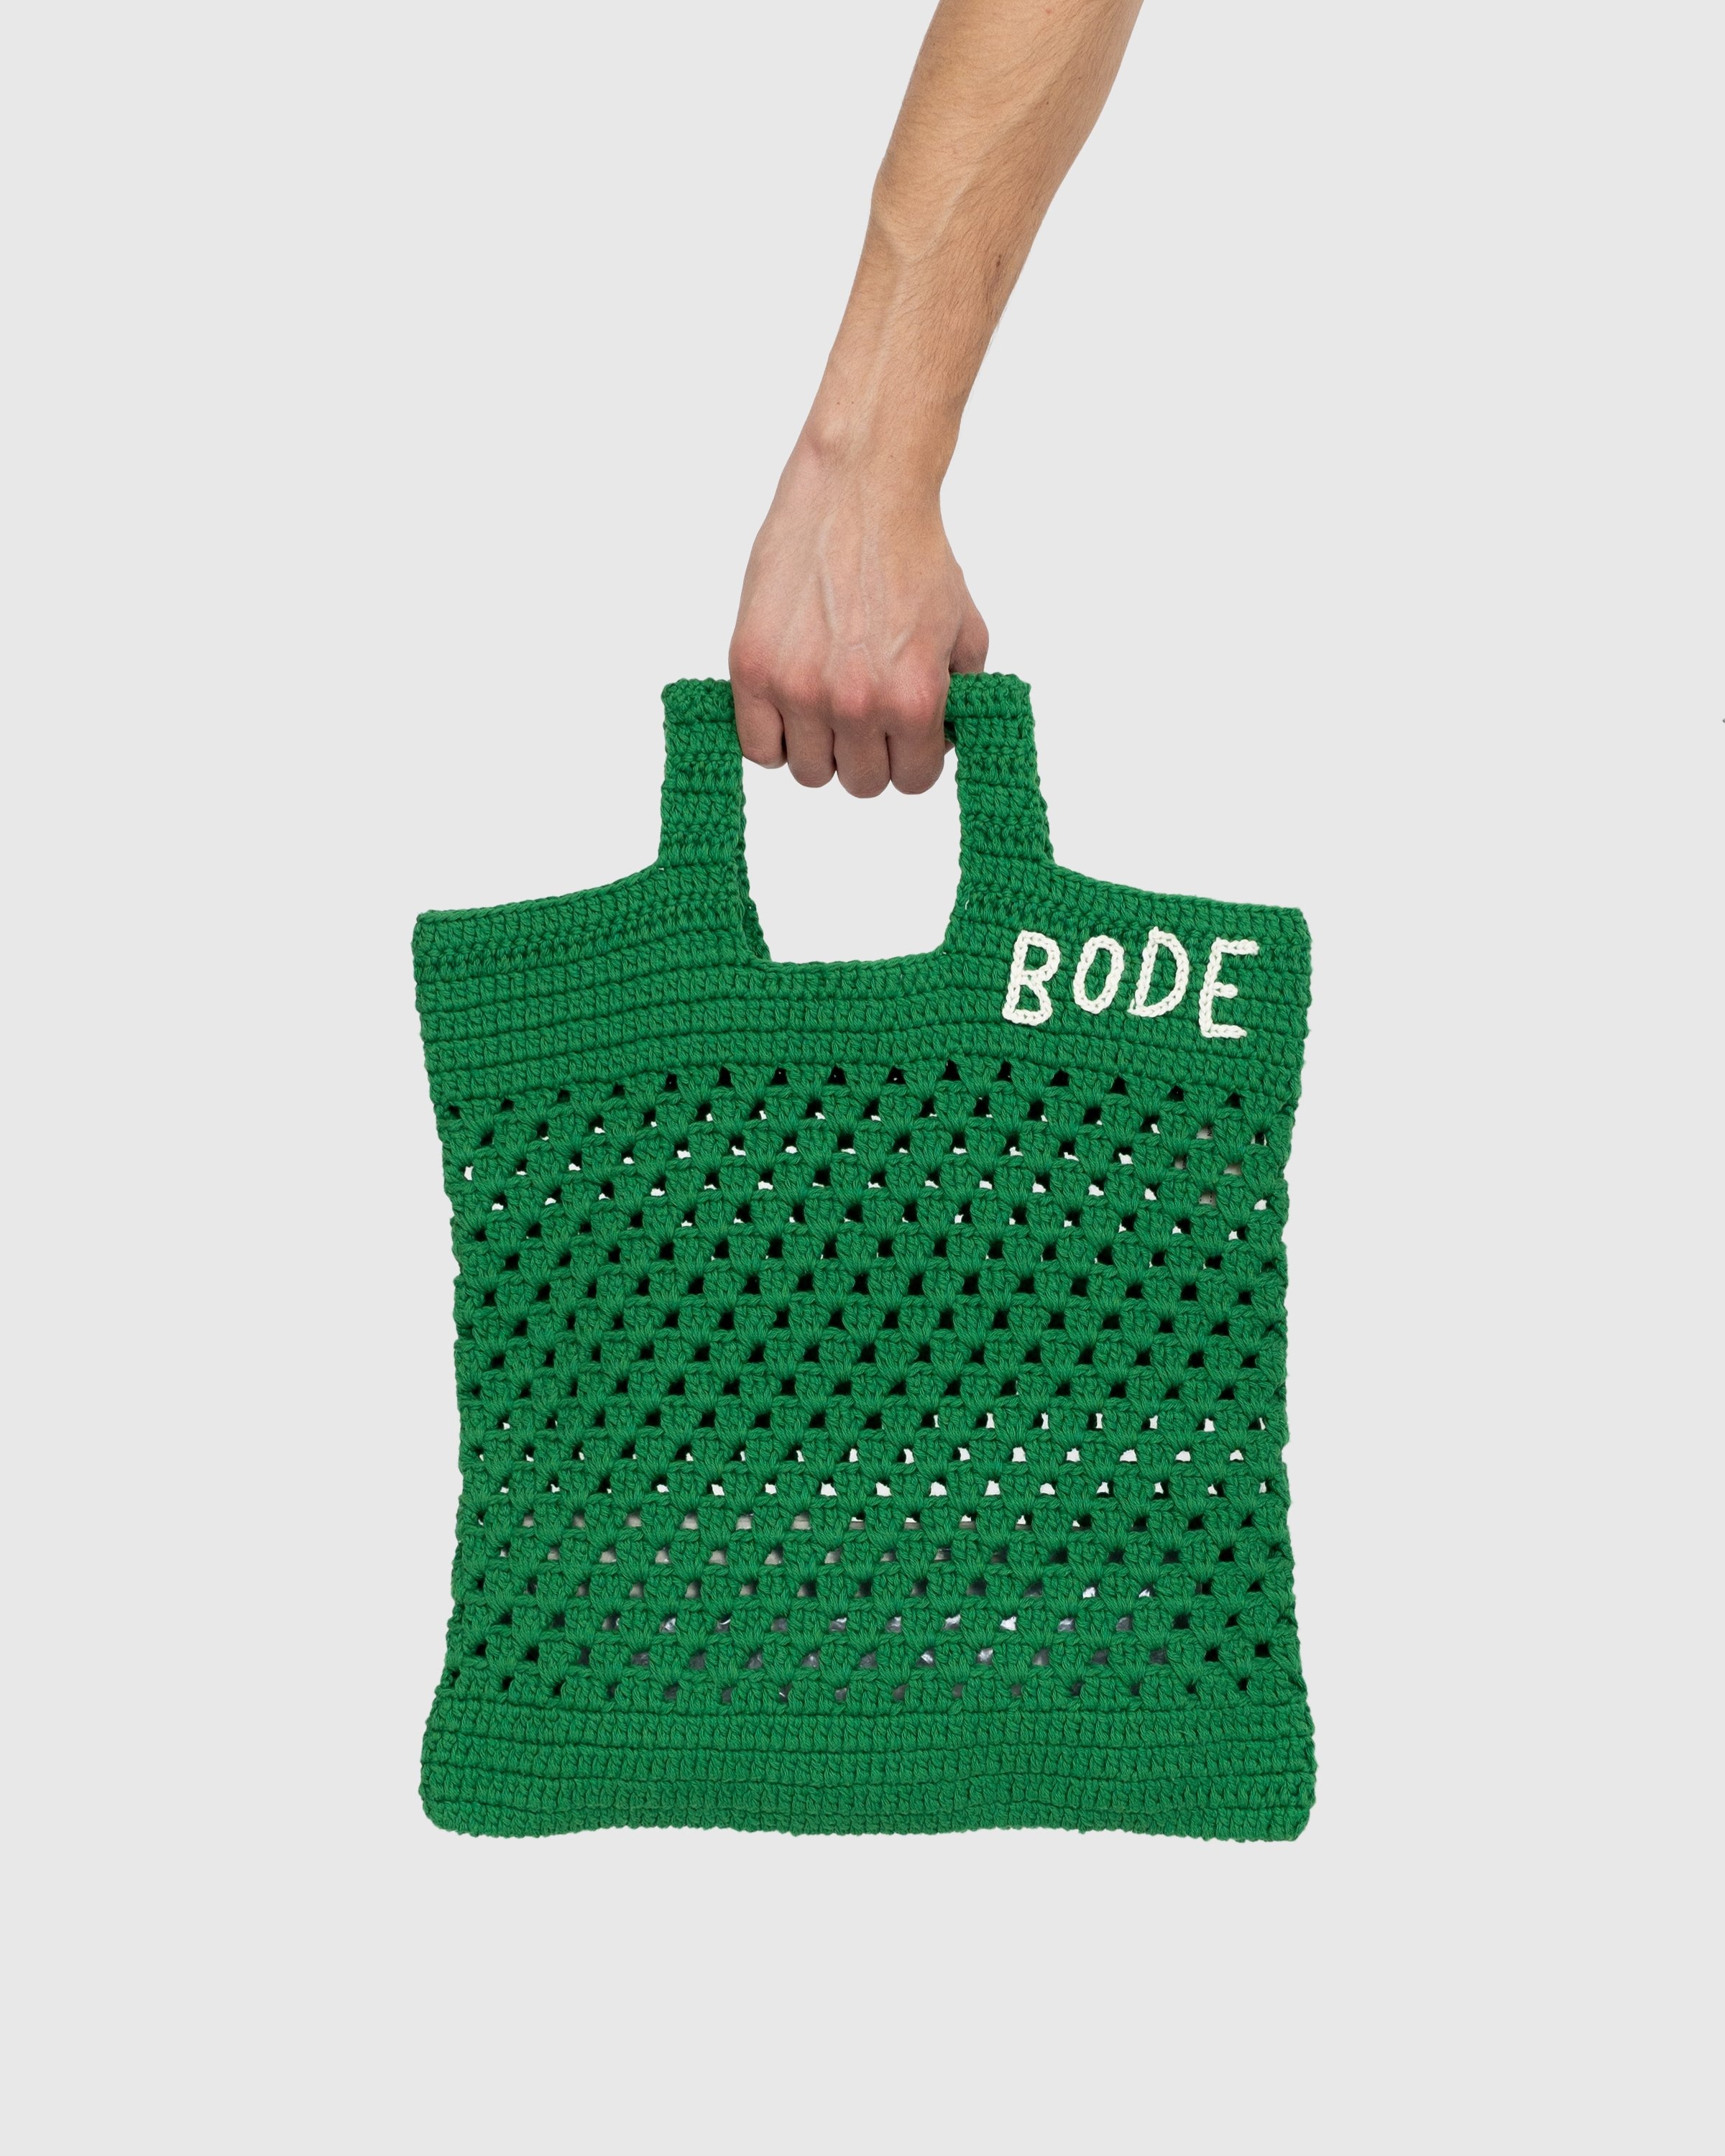 Bode – Crochet Tote Green | Highsnobiety Shop